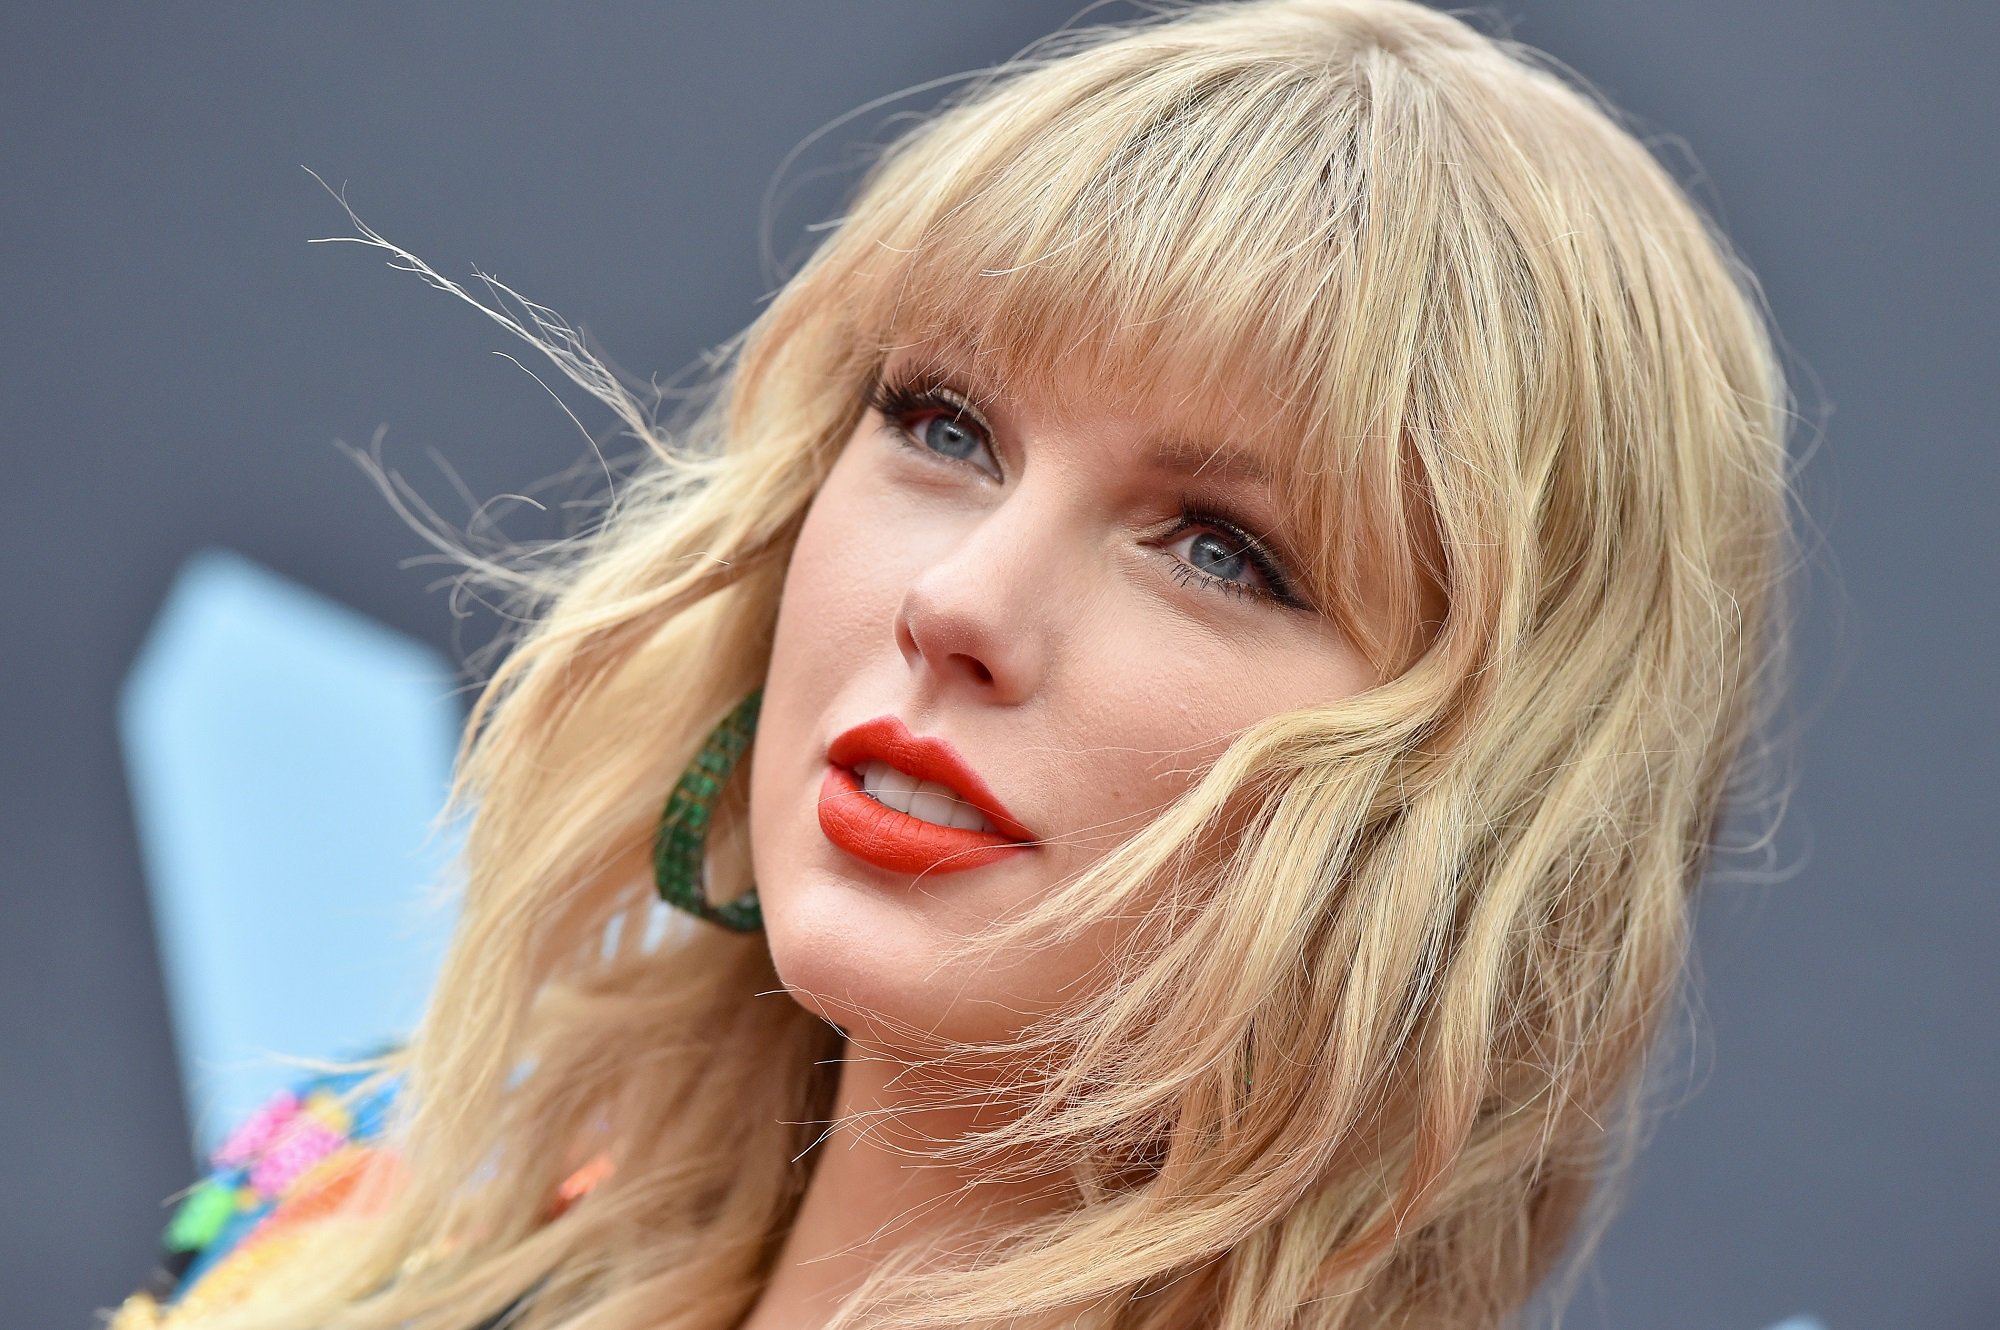 NEWARK, NEW JERSEY, USA - AUGUST 26: Singer Taylor Swift wearing a